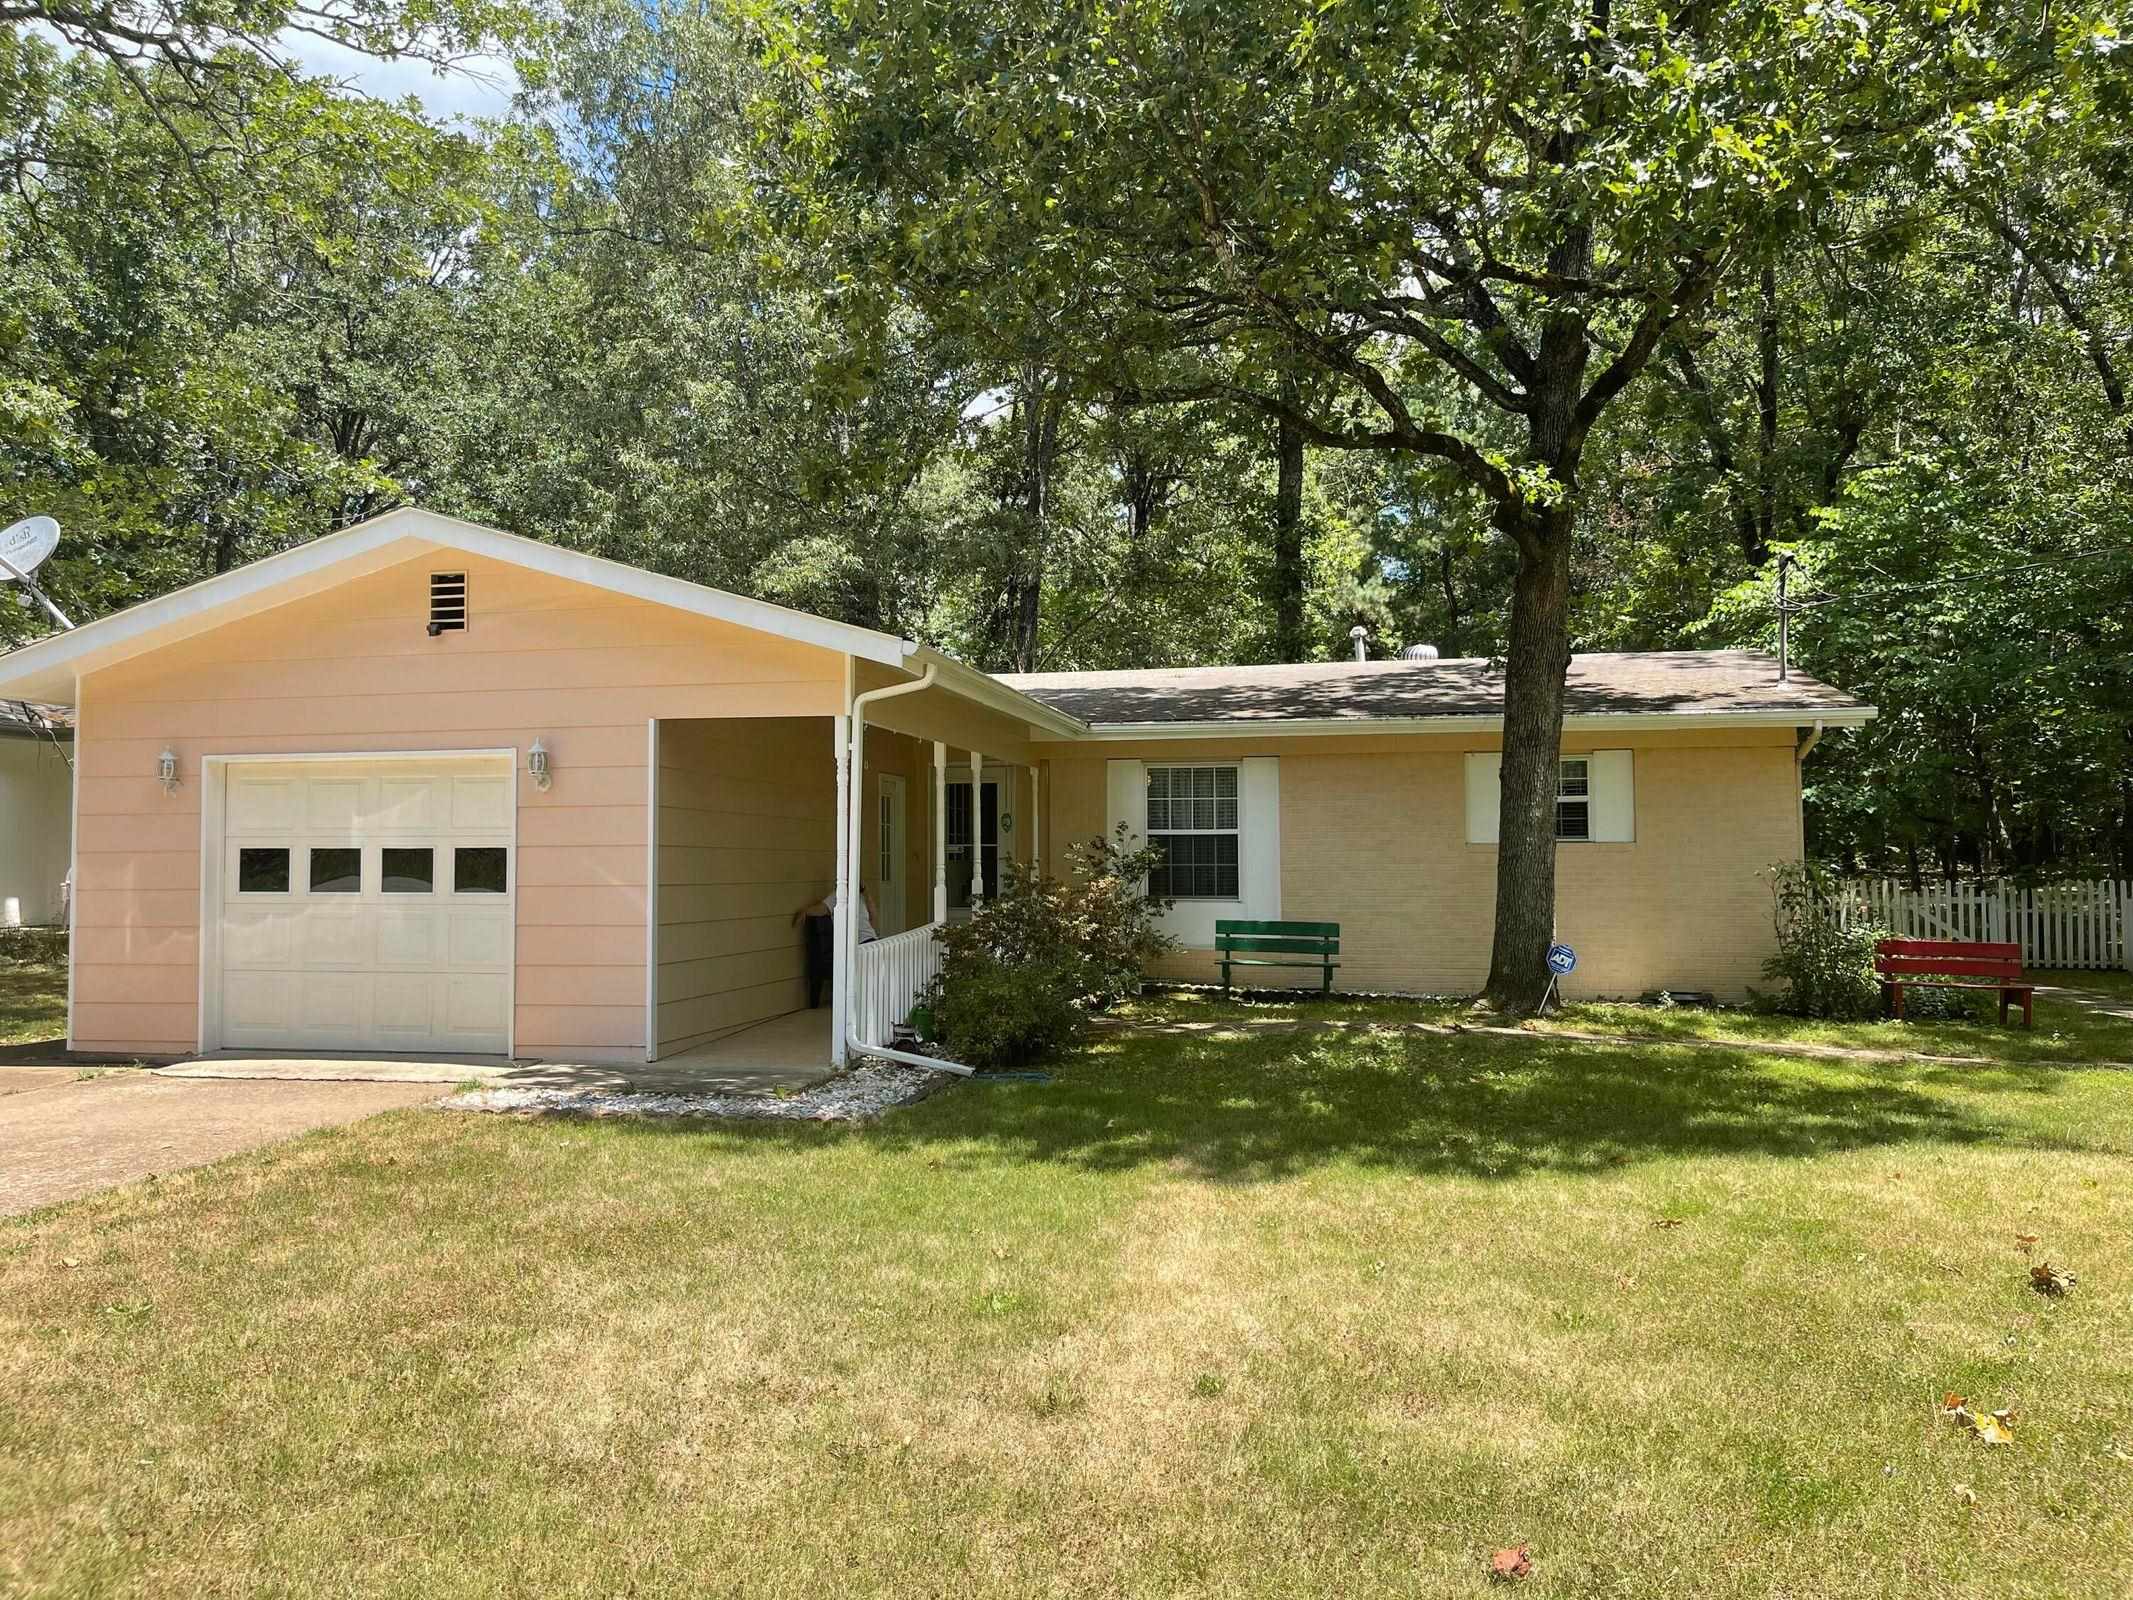 Residential for sale – 145  Pottawattamie   Cherokee Village, AR